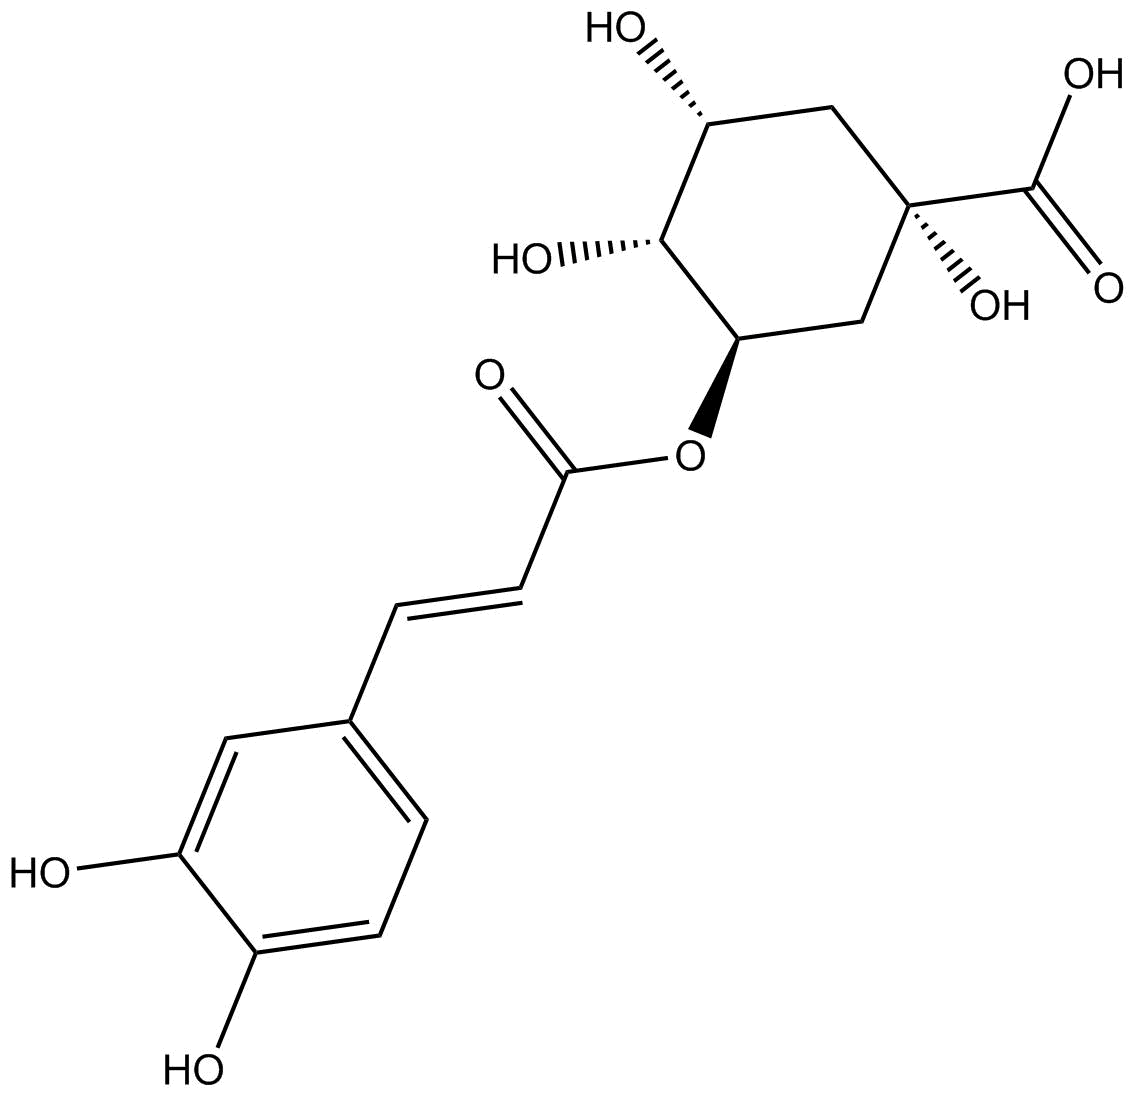 Chlorogenic acid